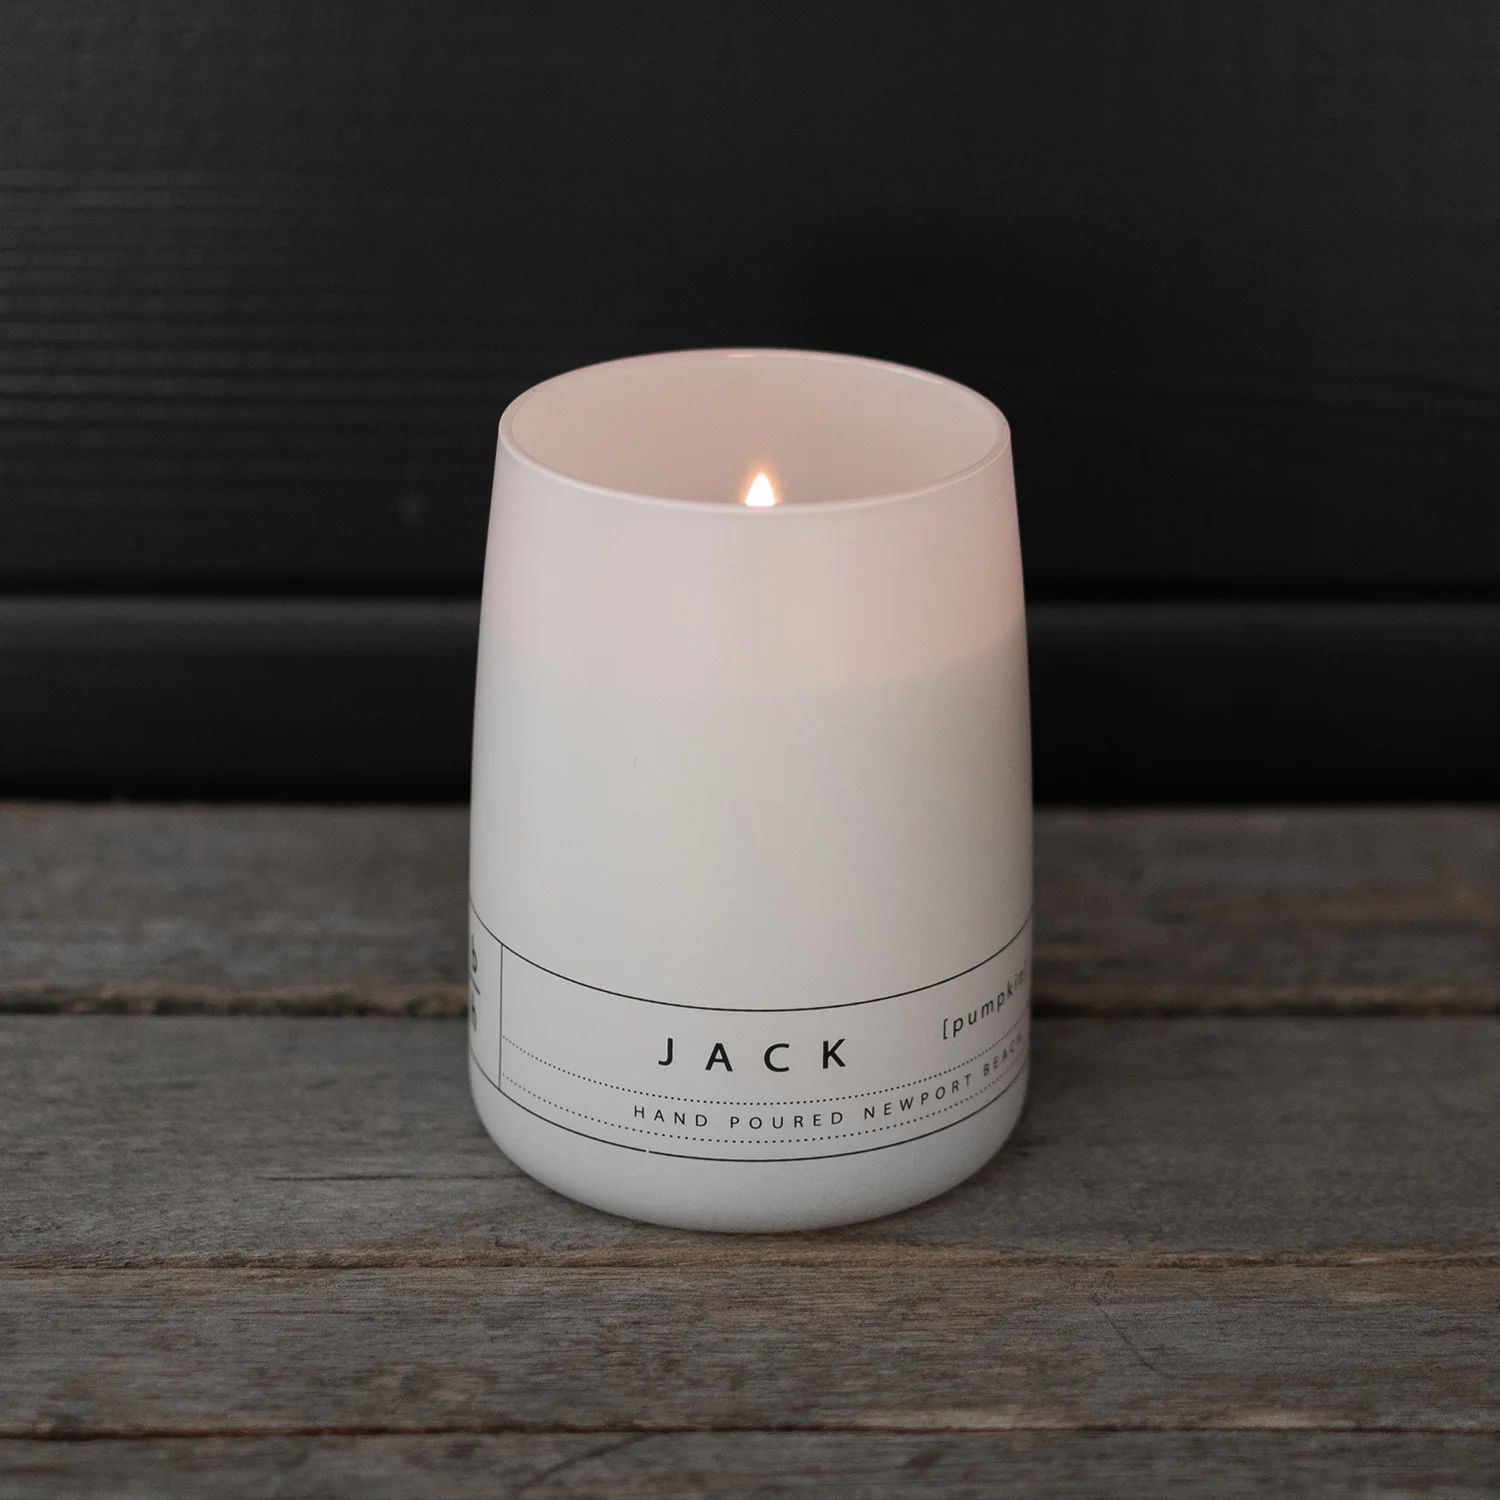 JACK [pumpkin] | backhouse fragrances